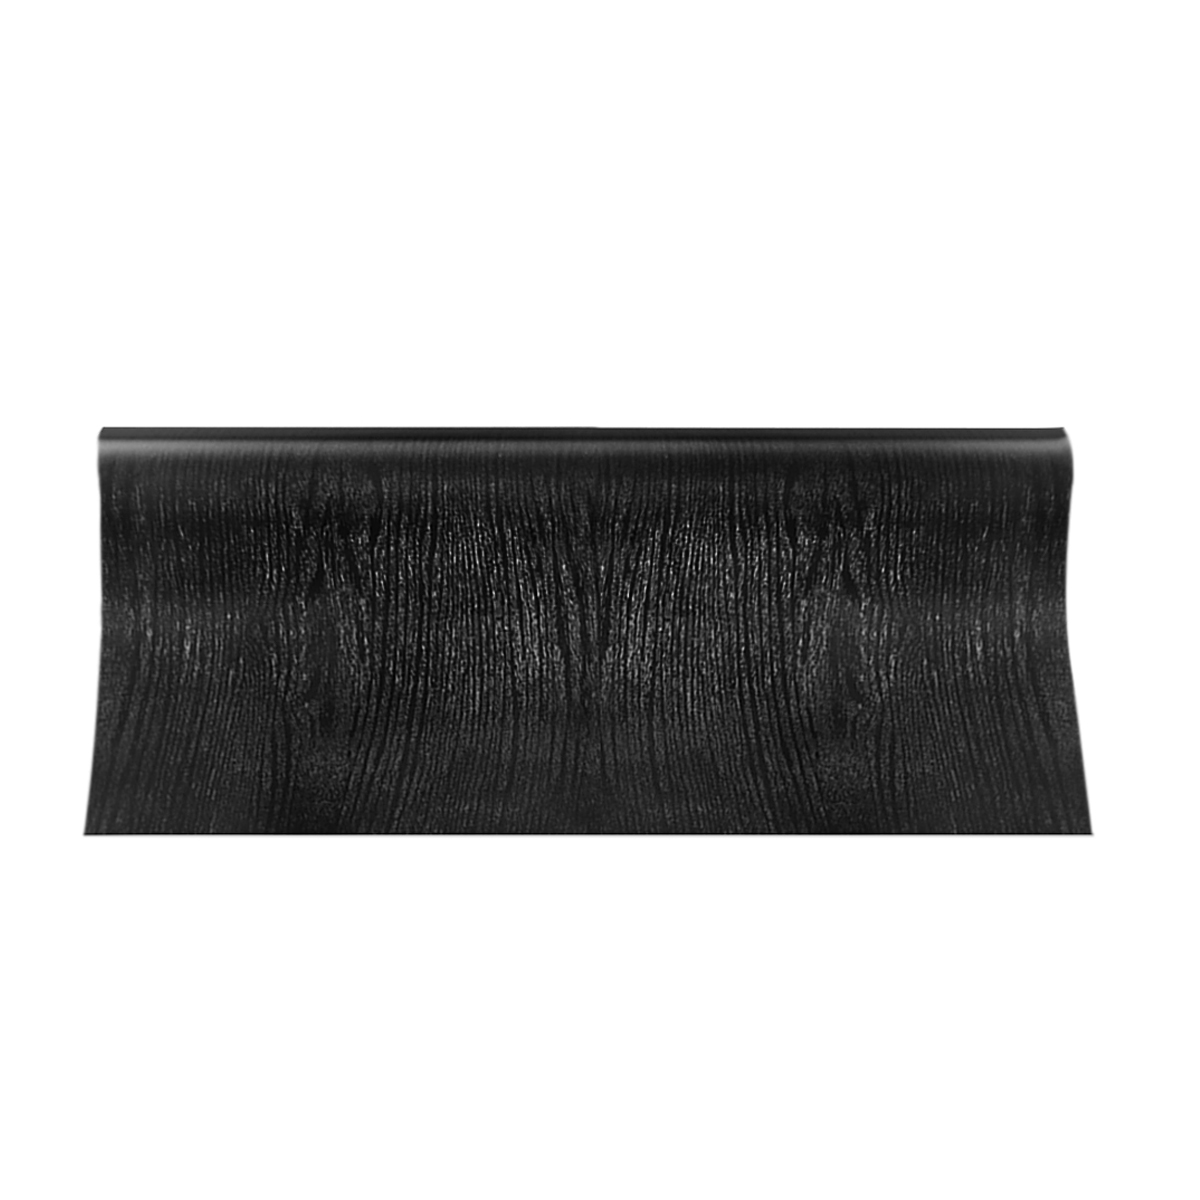 Black-Wood-Looking-Textured-Self-Adhesive-Decor-Contact-Paper-Vinyl-Shelf-Liner-Wall-Paper-1304238-5